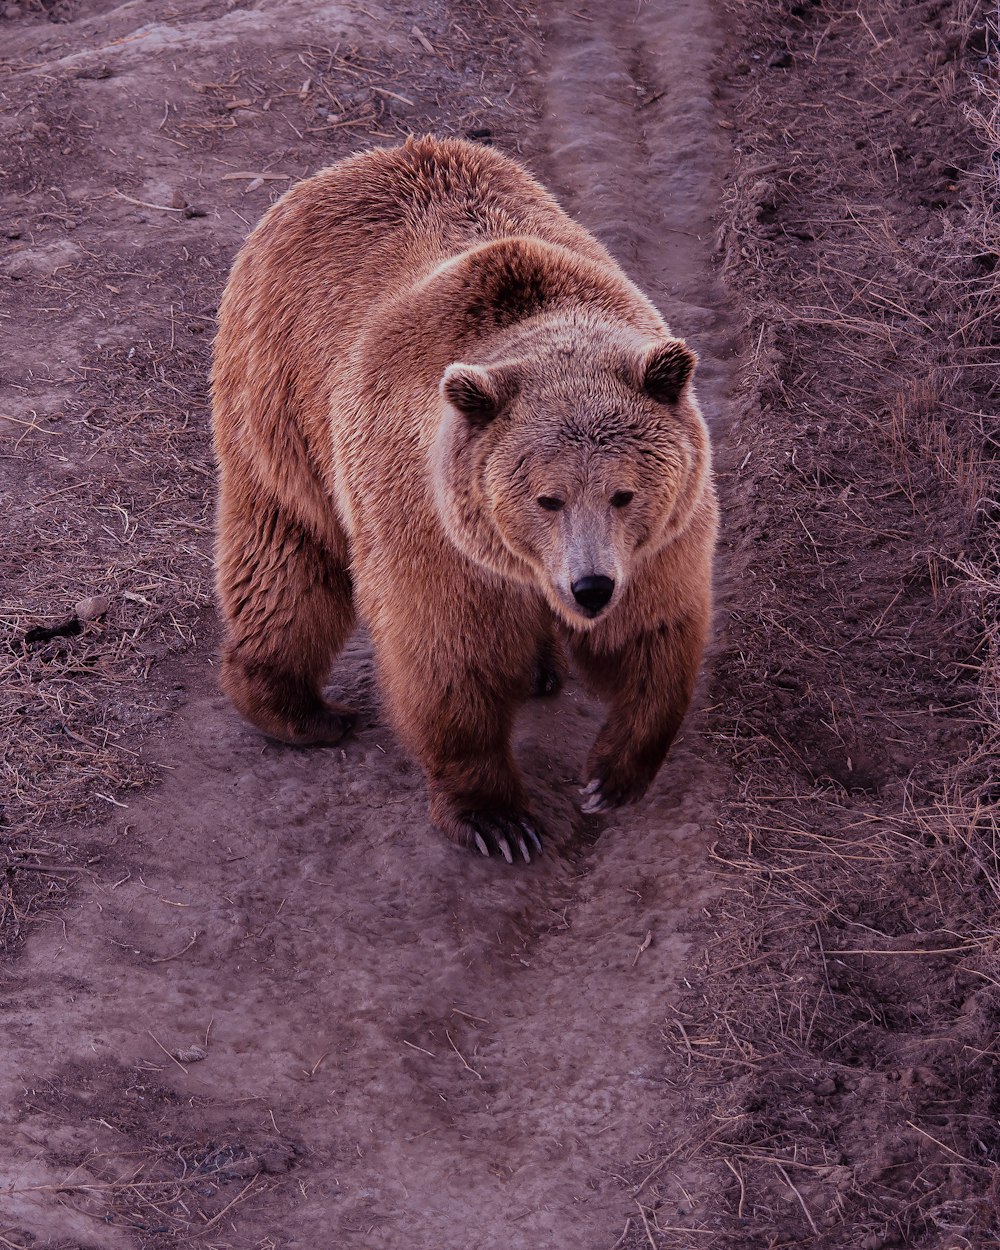 a large brown bear walking across a dirt field